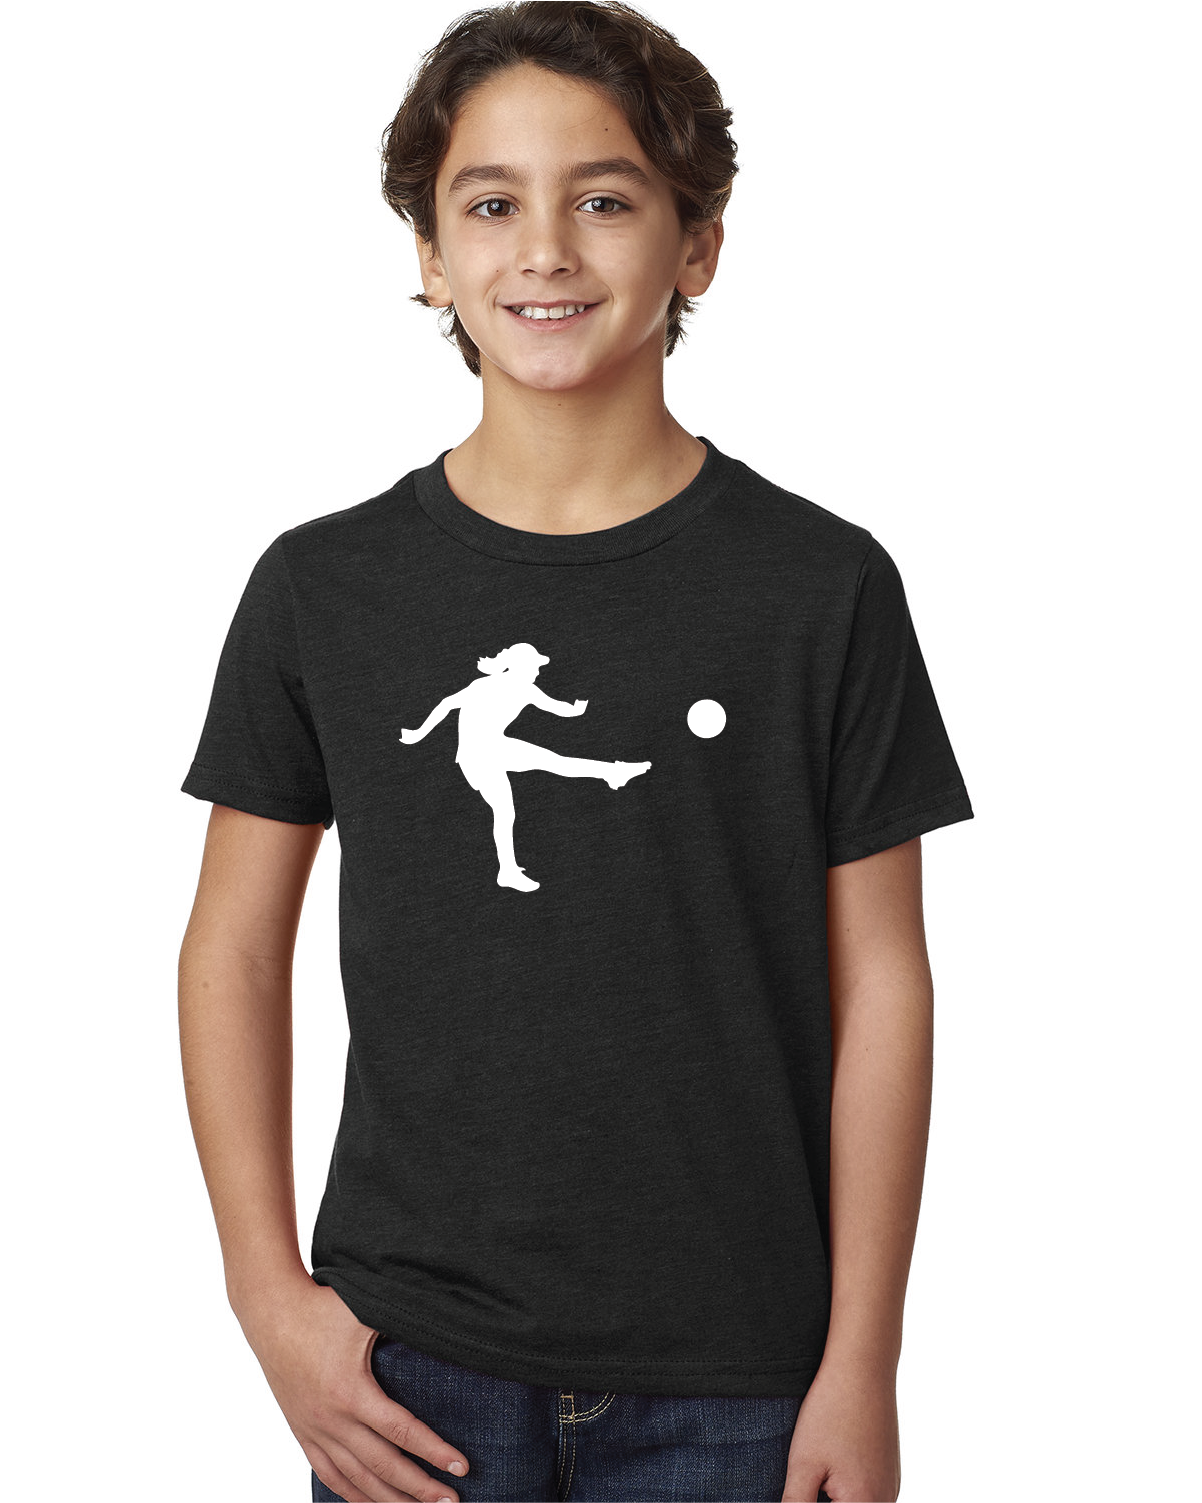 Kicker T-Shirt - Youth